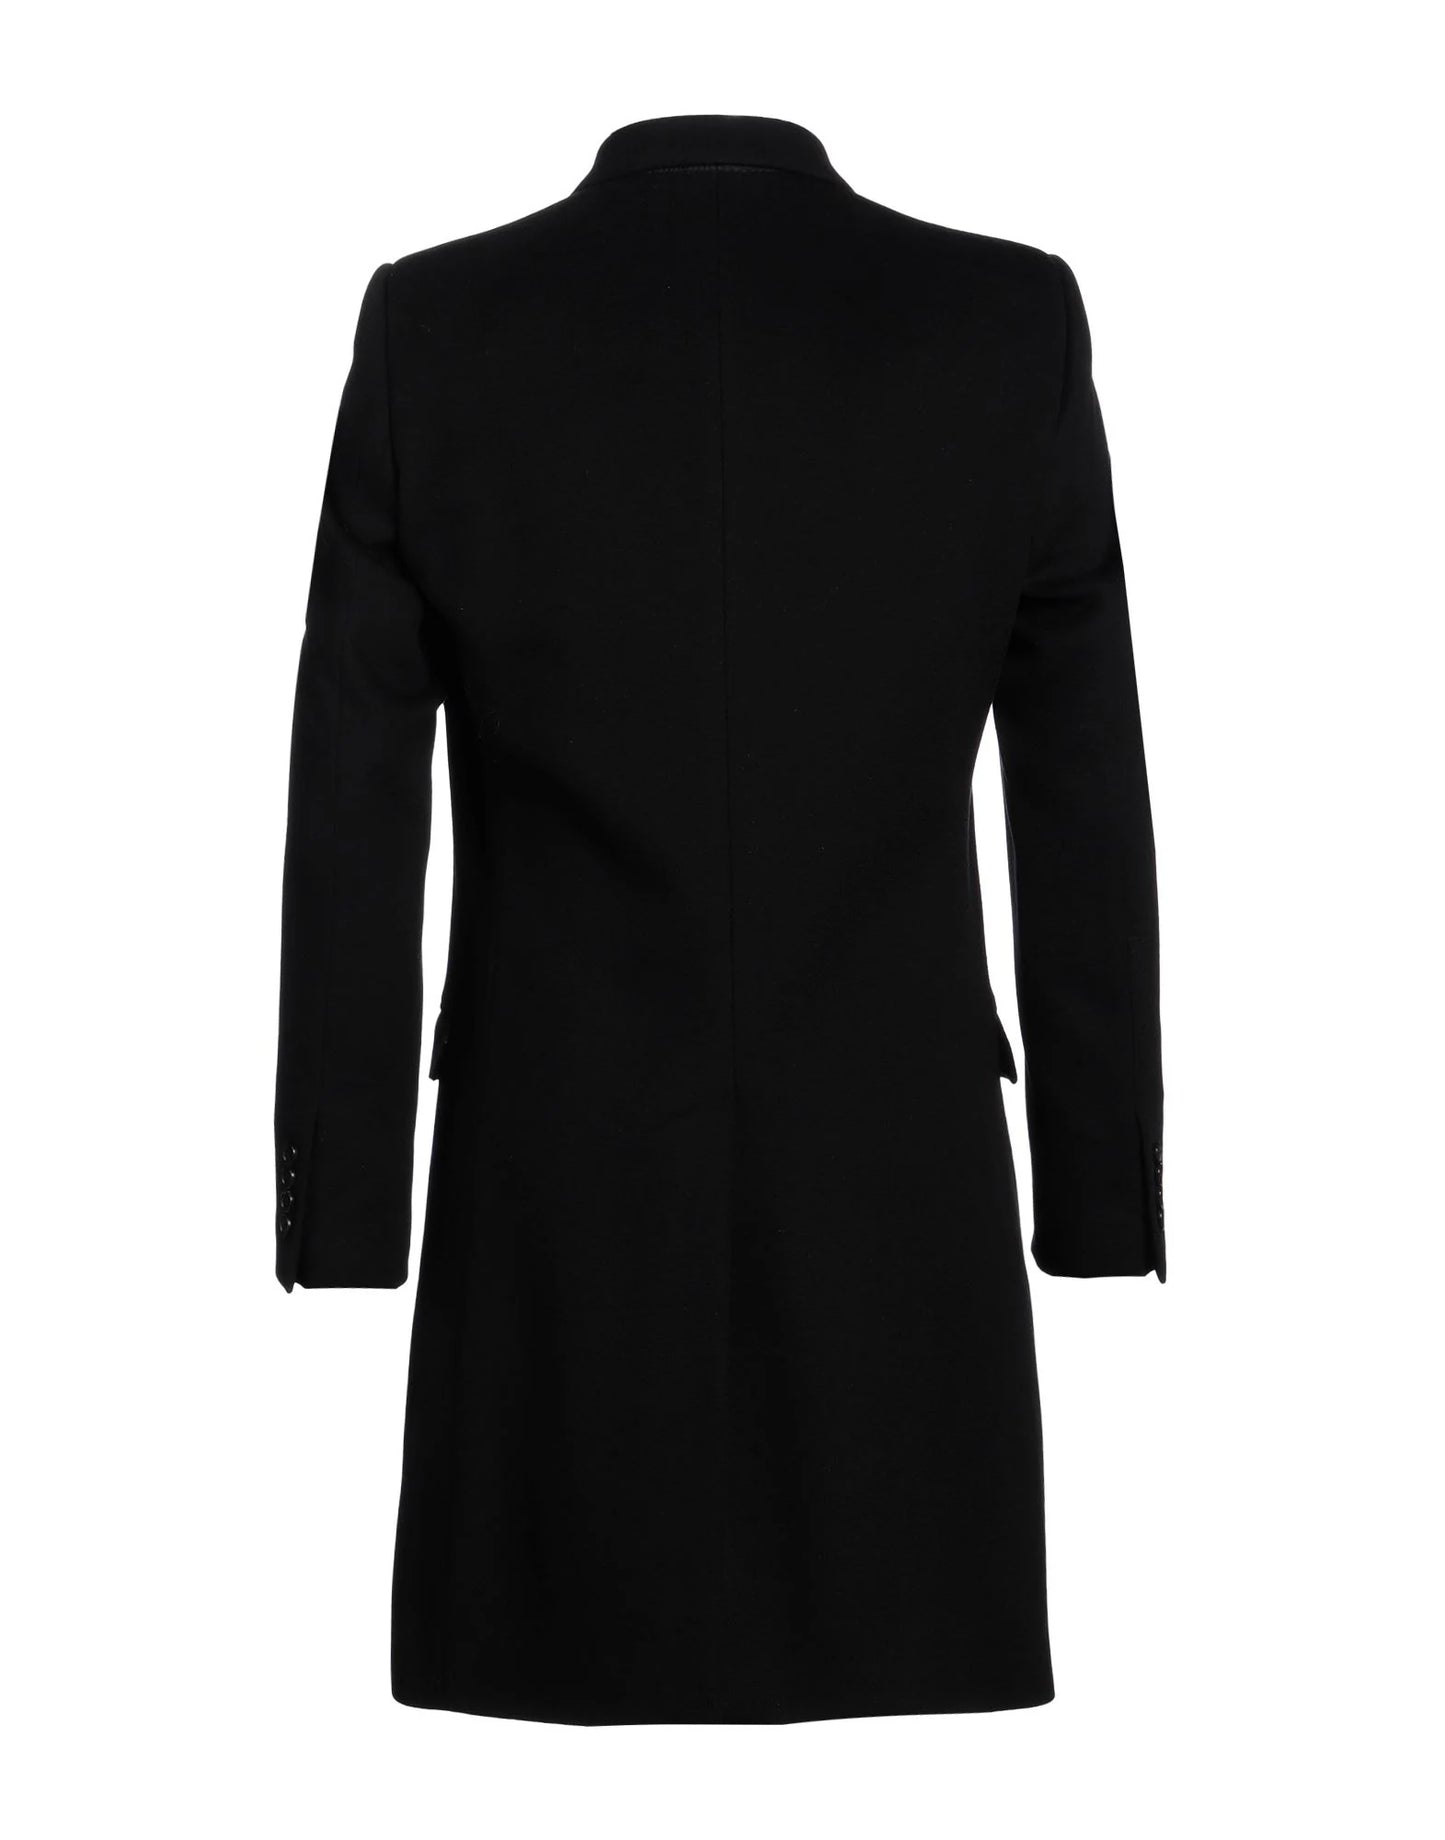 Dolce & Gabbana Black Wool Cashmere Coat